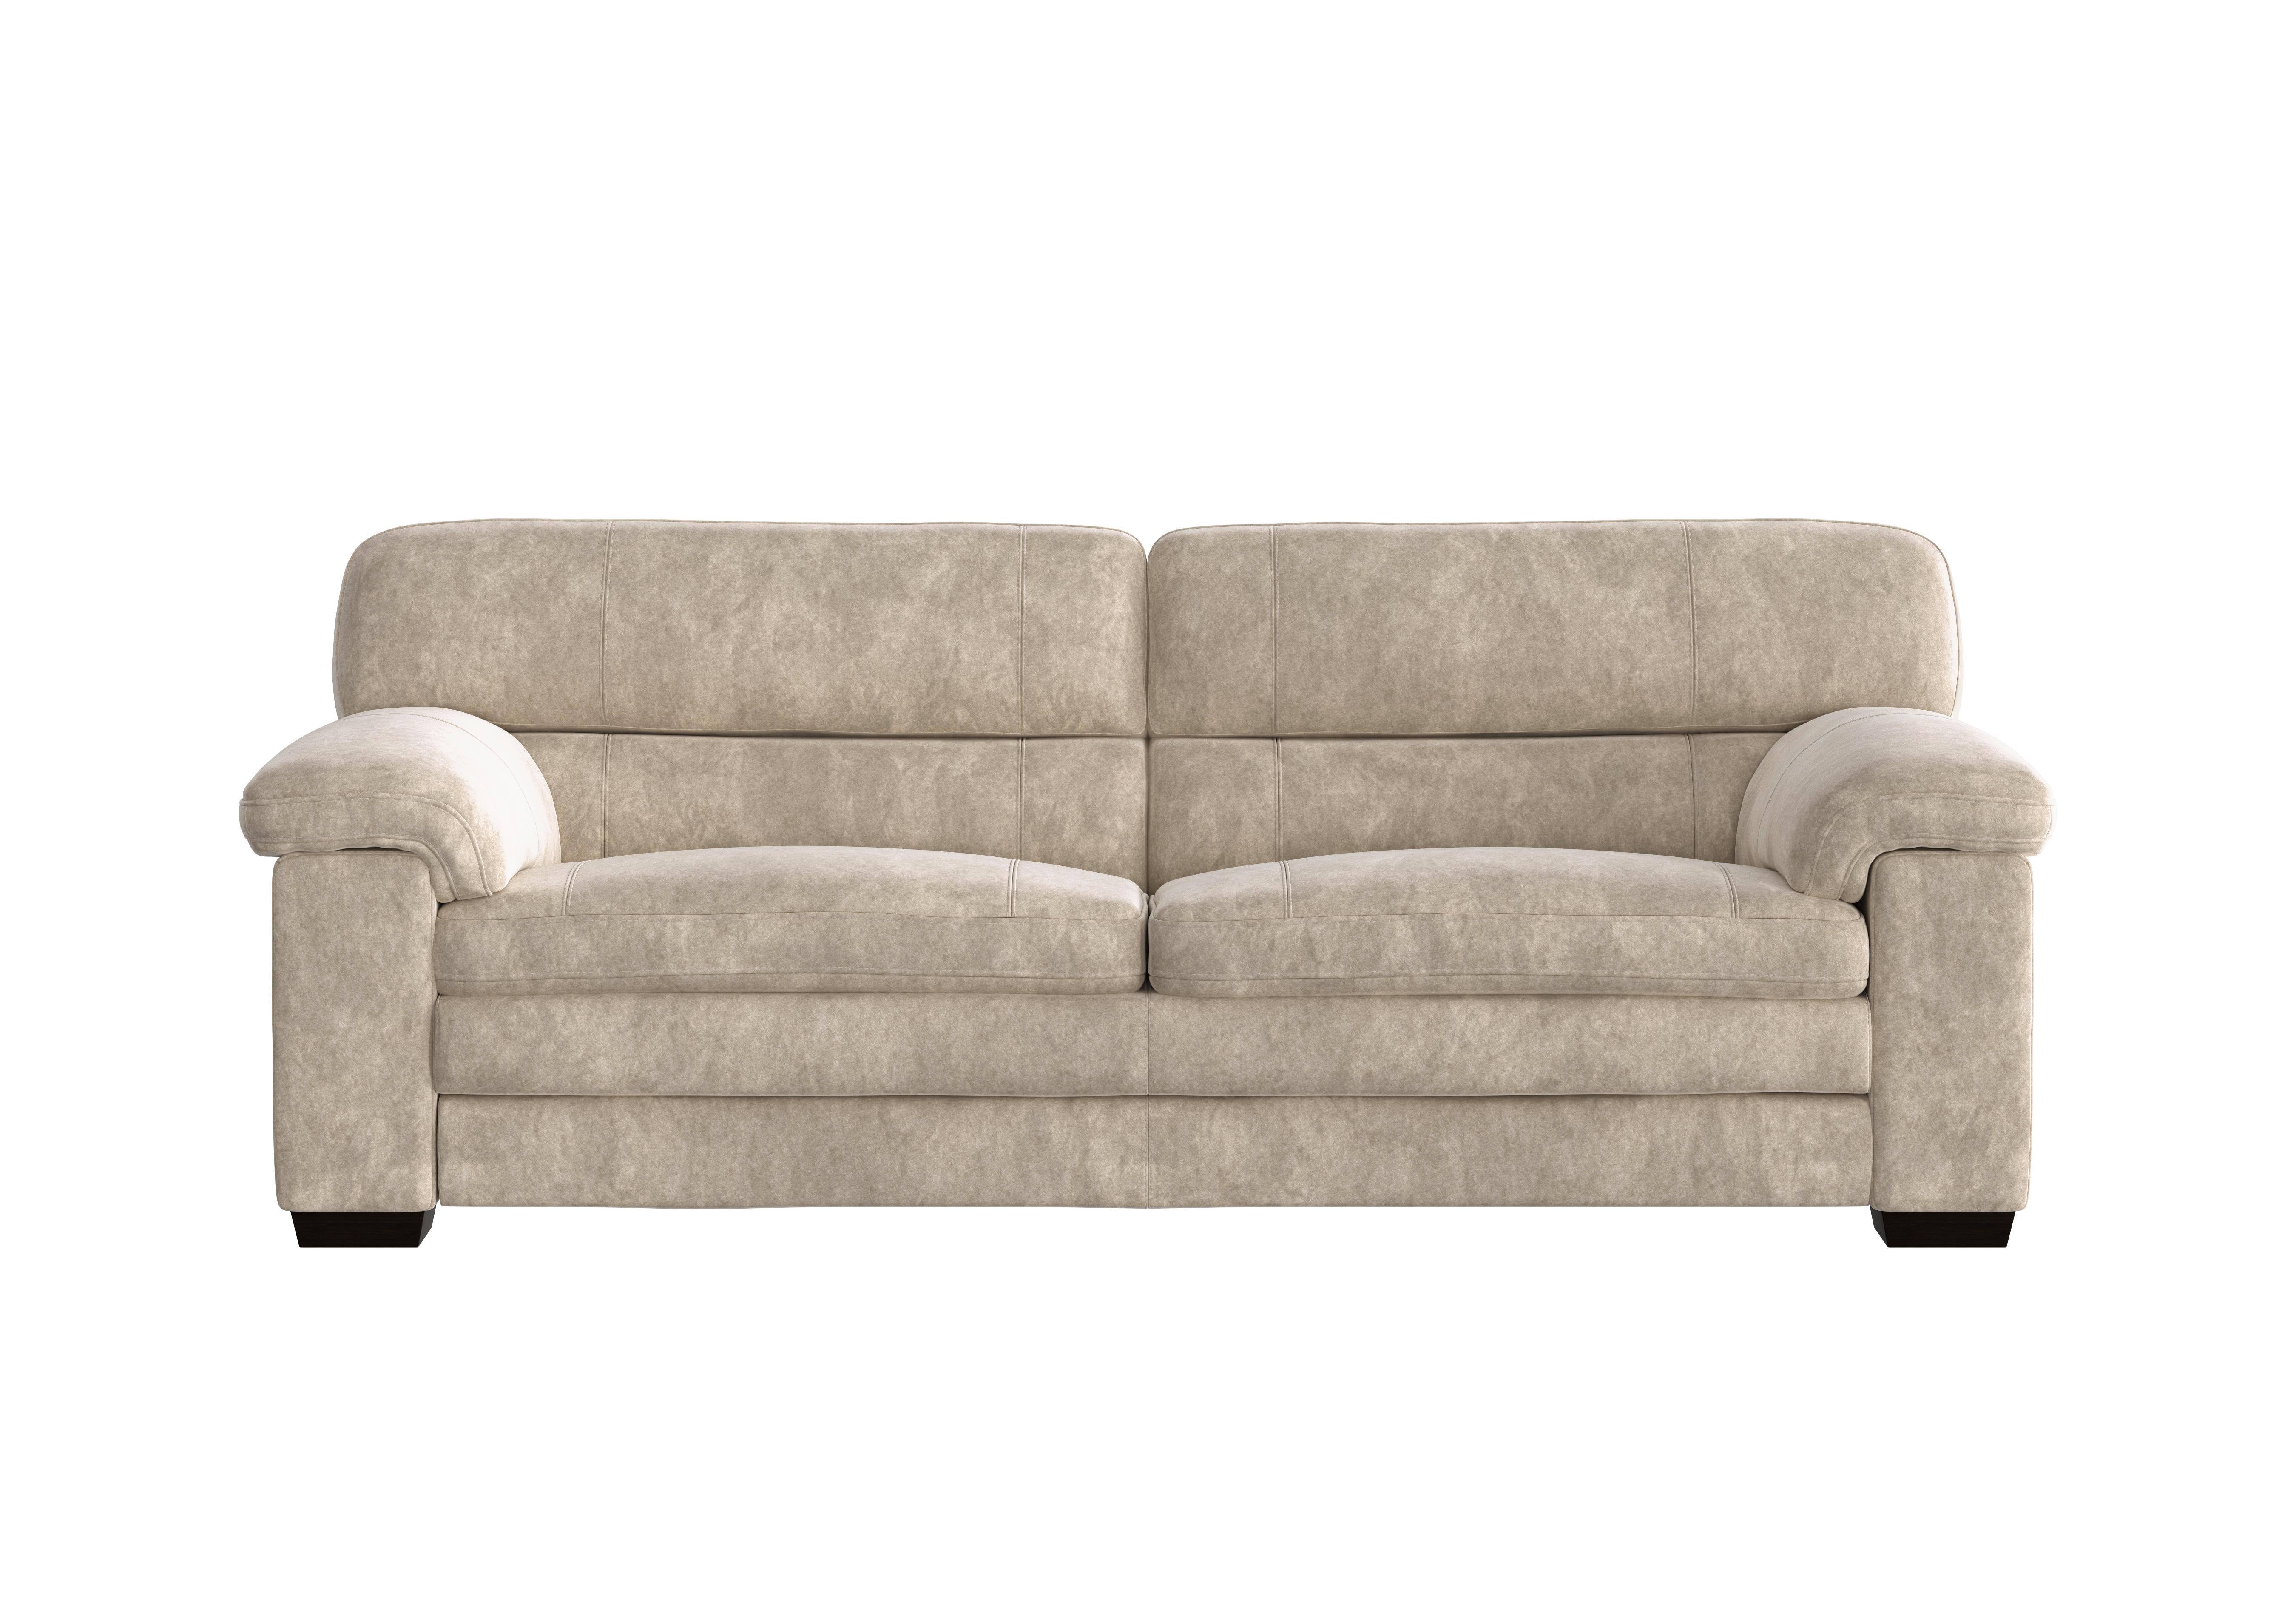 Cozee Fabric 3 Seater Sofa in Bfa-Bnn-R26 Fv2 Cream on Furniture Village